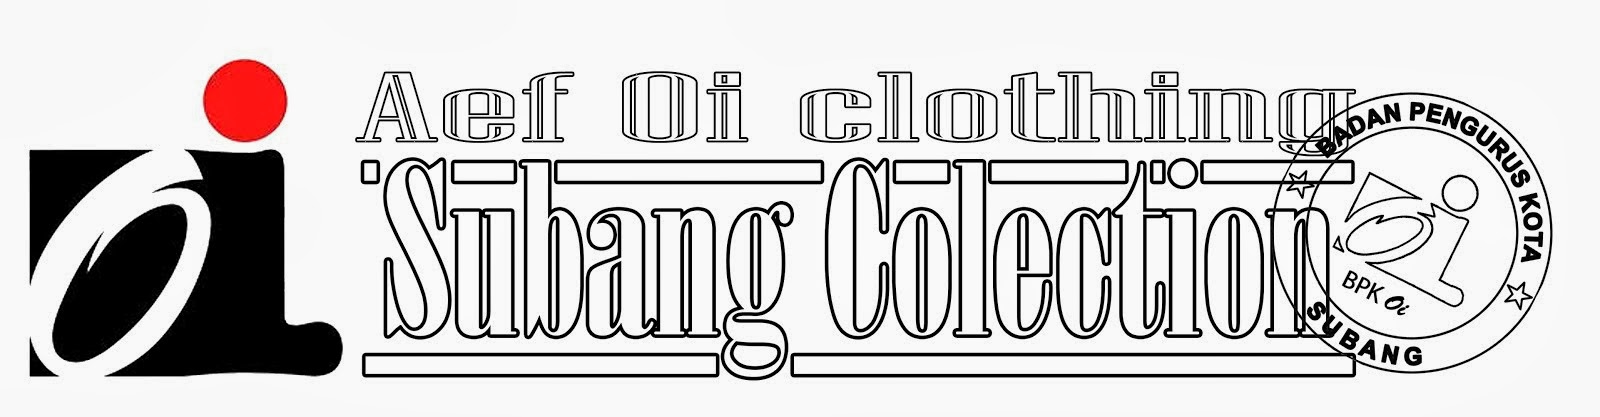 Aef Oi Clothing Subang Colection